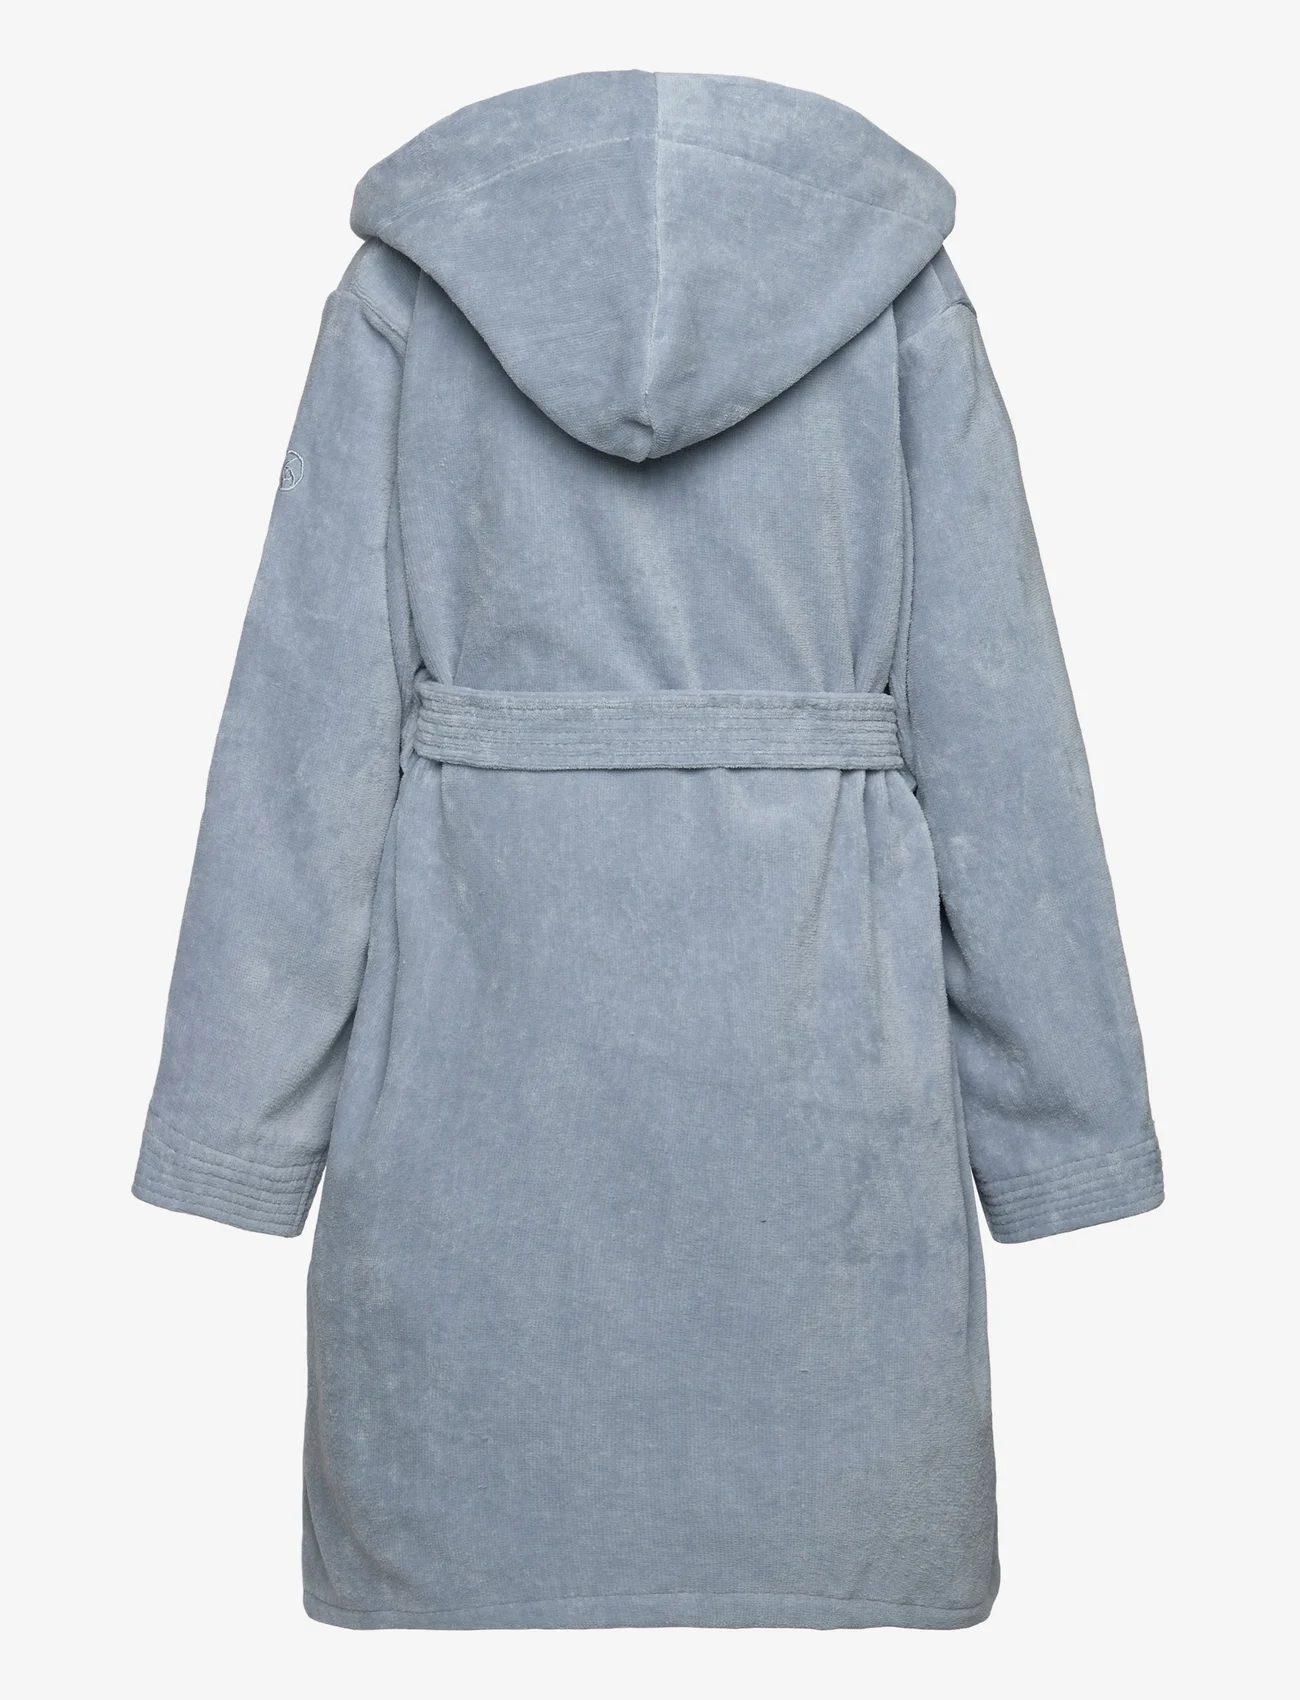 Rosemunde Kids - Organic robe - natt- & undertøy - dusty blue - 1